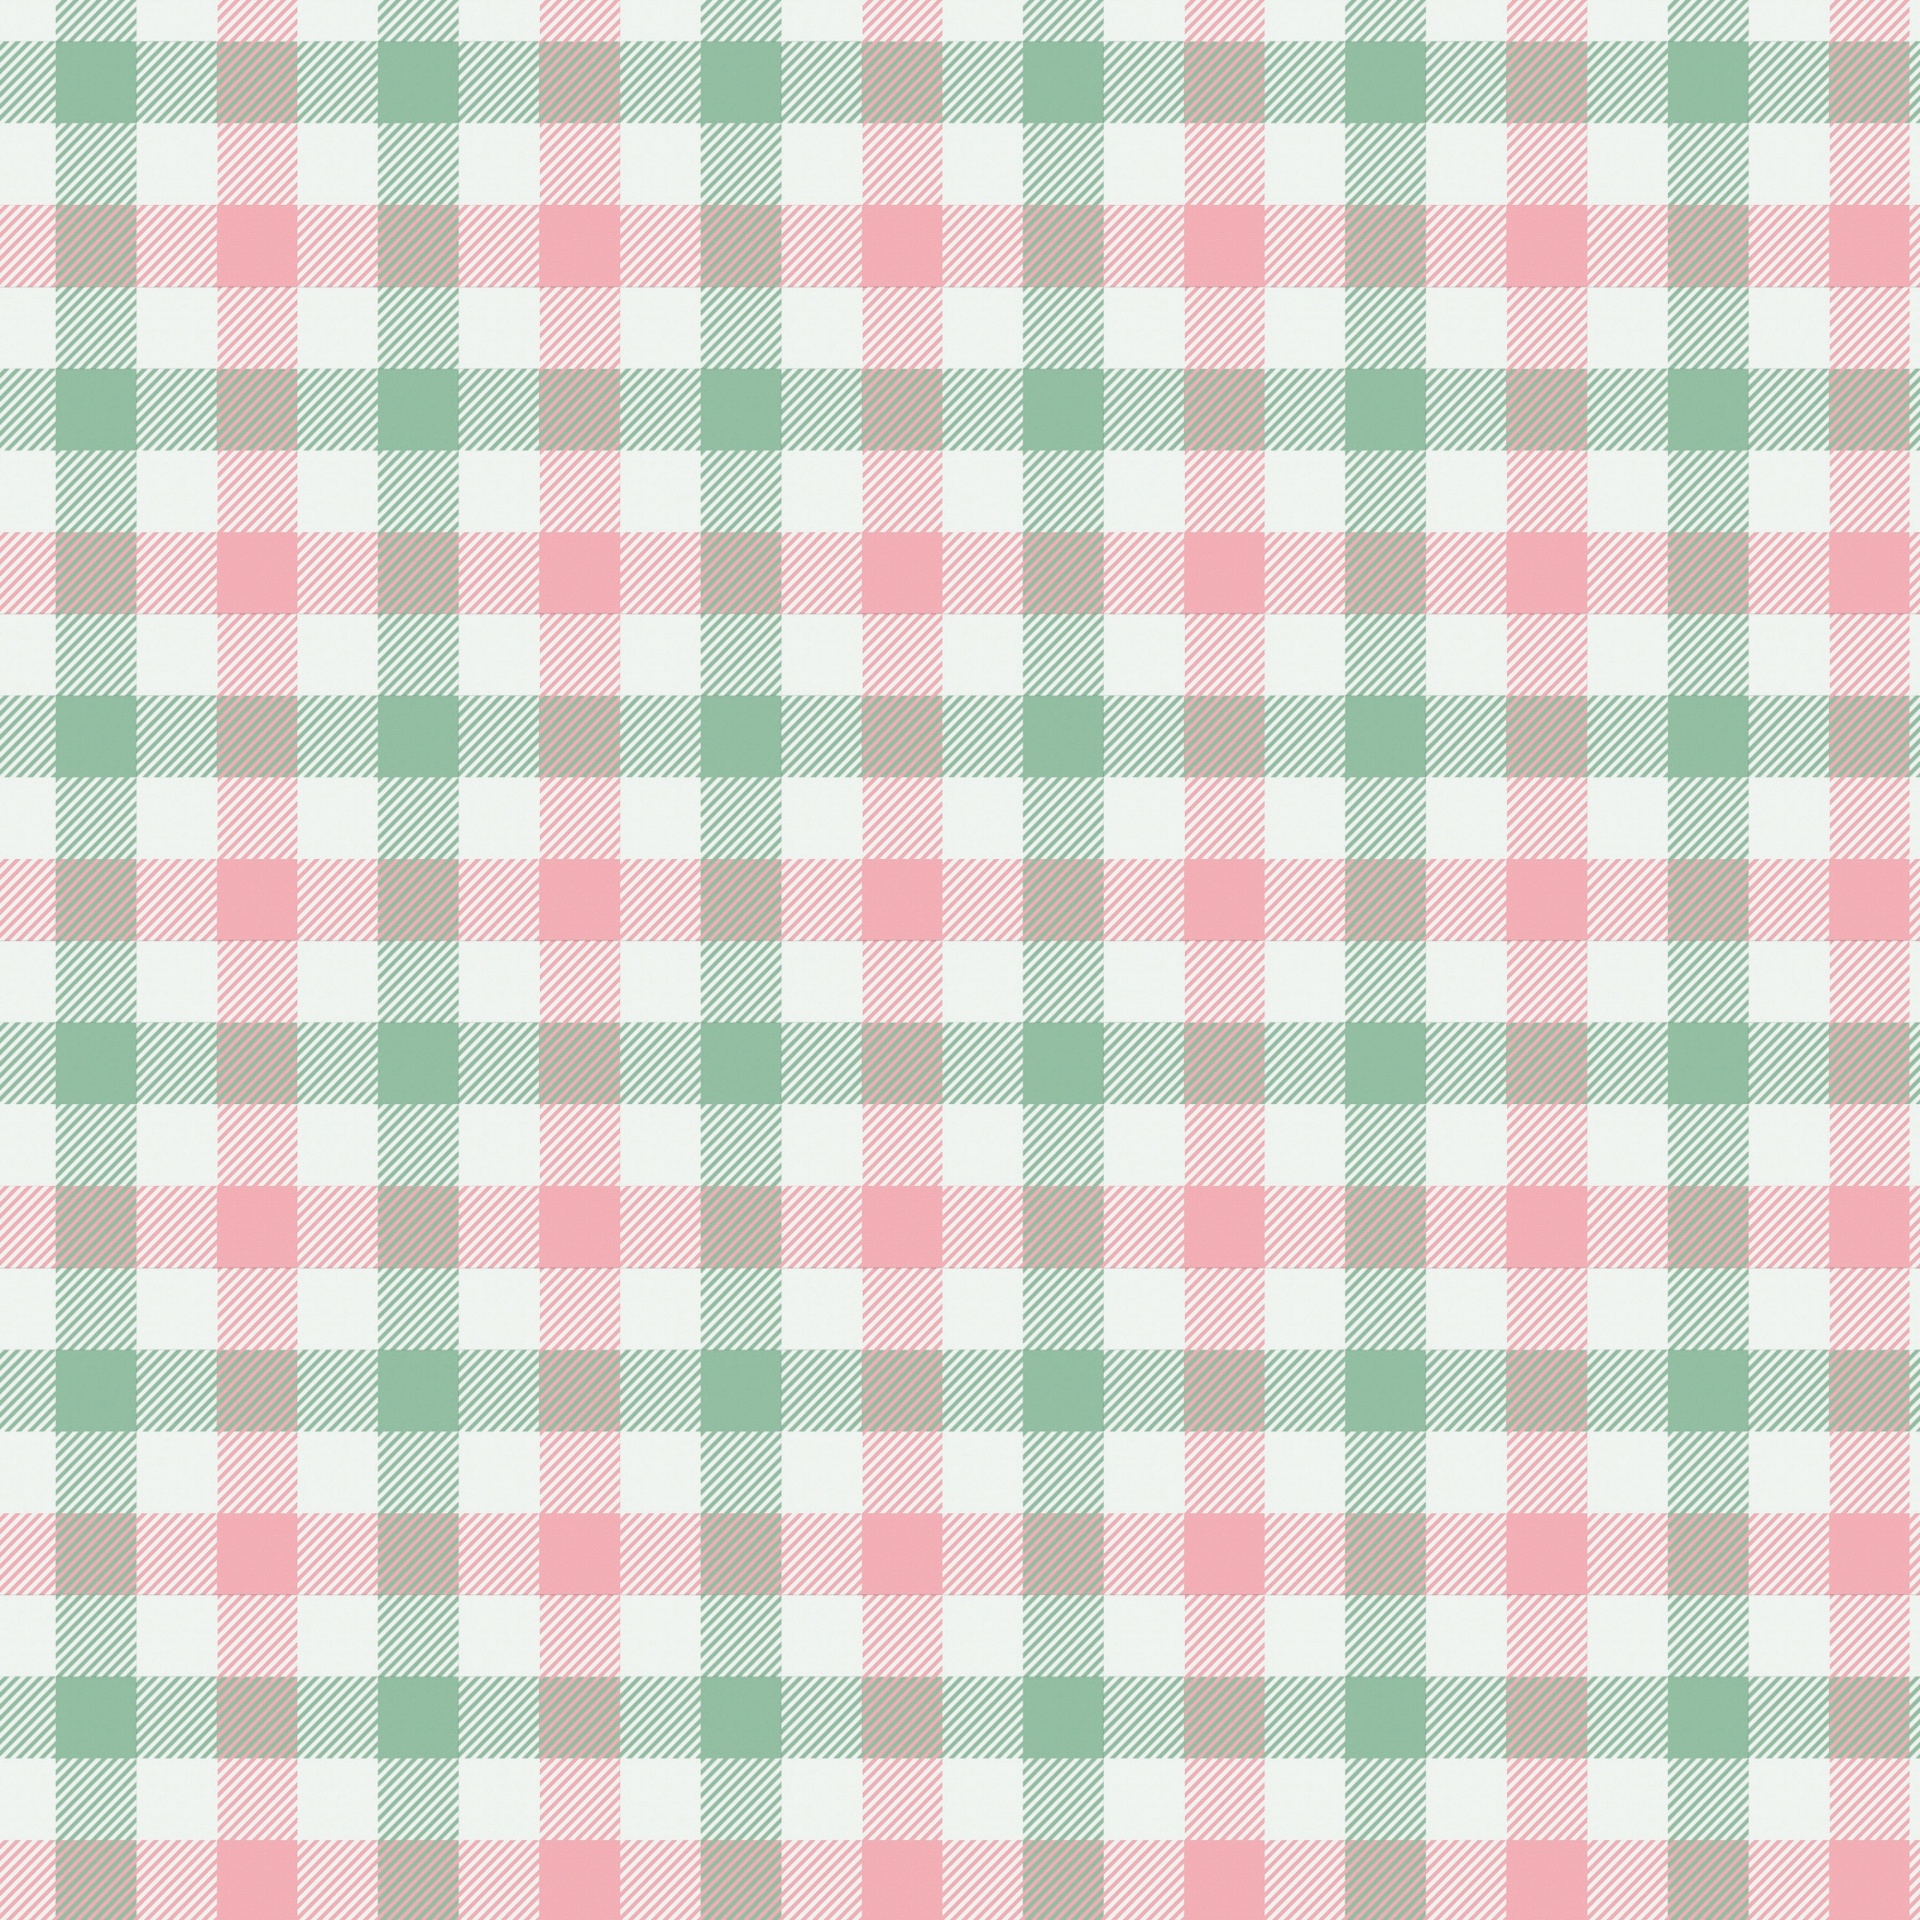 Plaid checkered checks pattern digital background